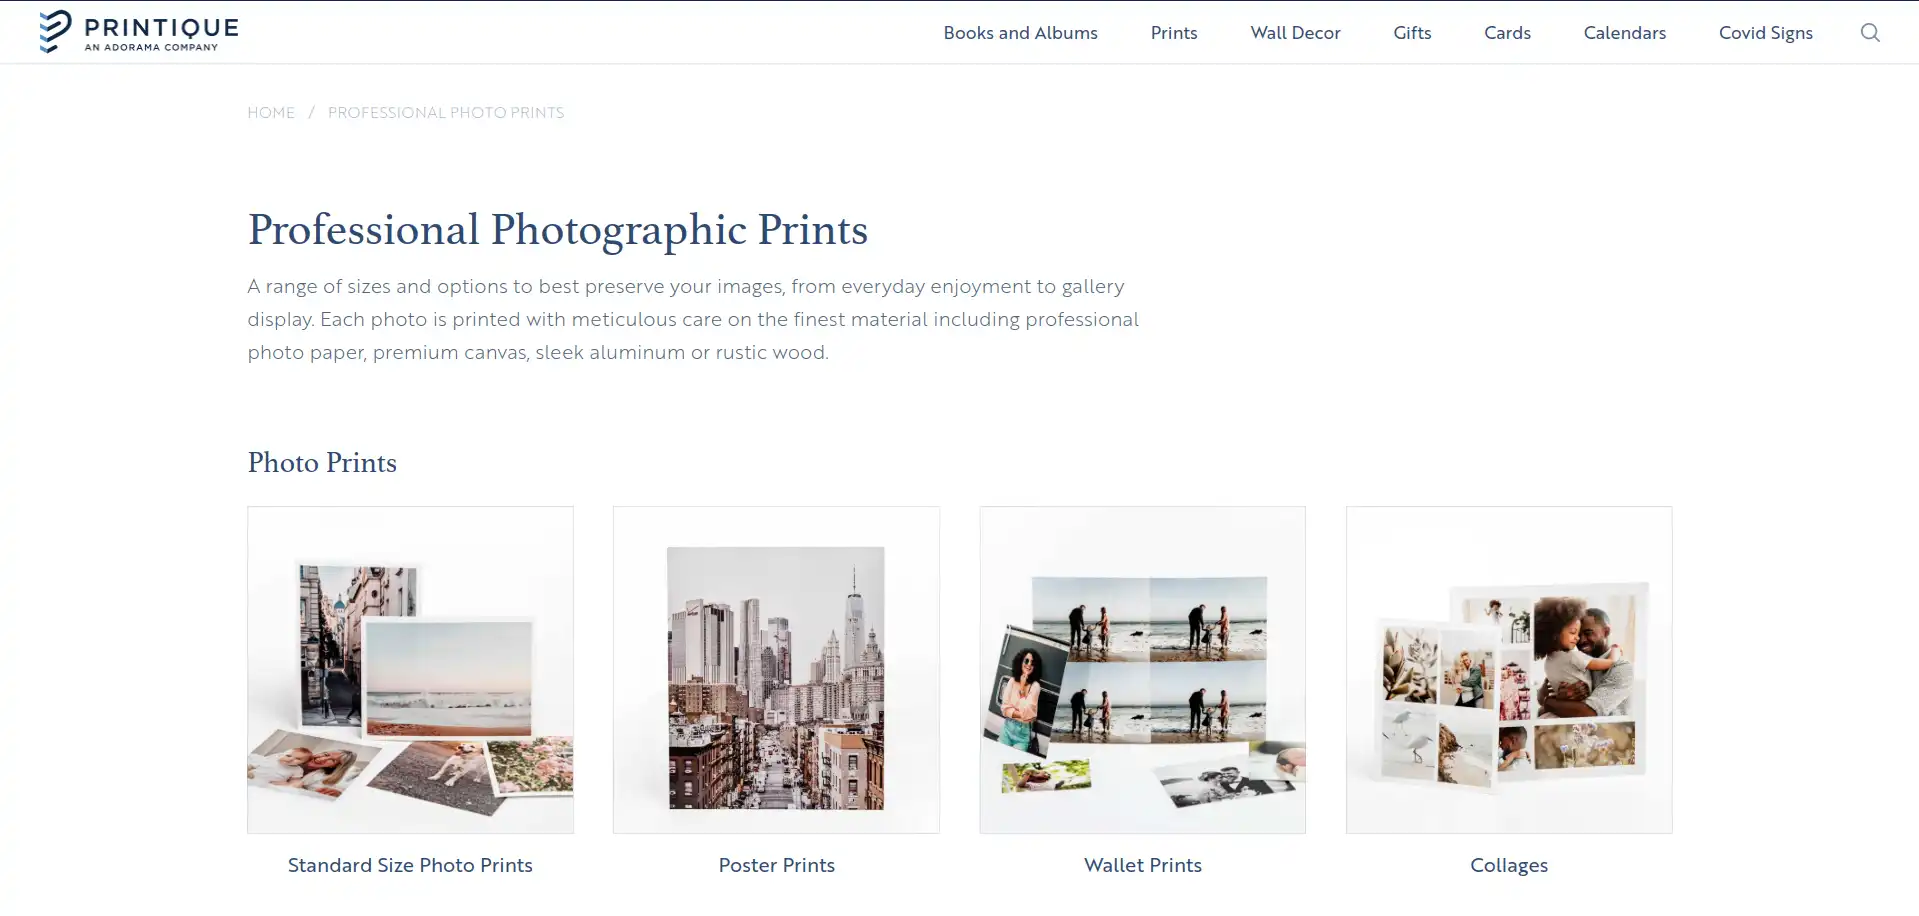 Photo Prints - Professional Photo Printing - Printique, An Adorama Company